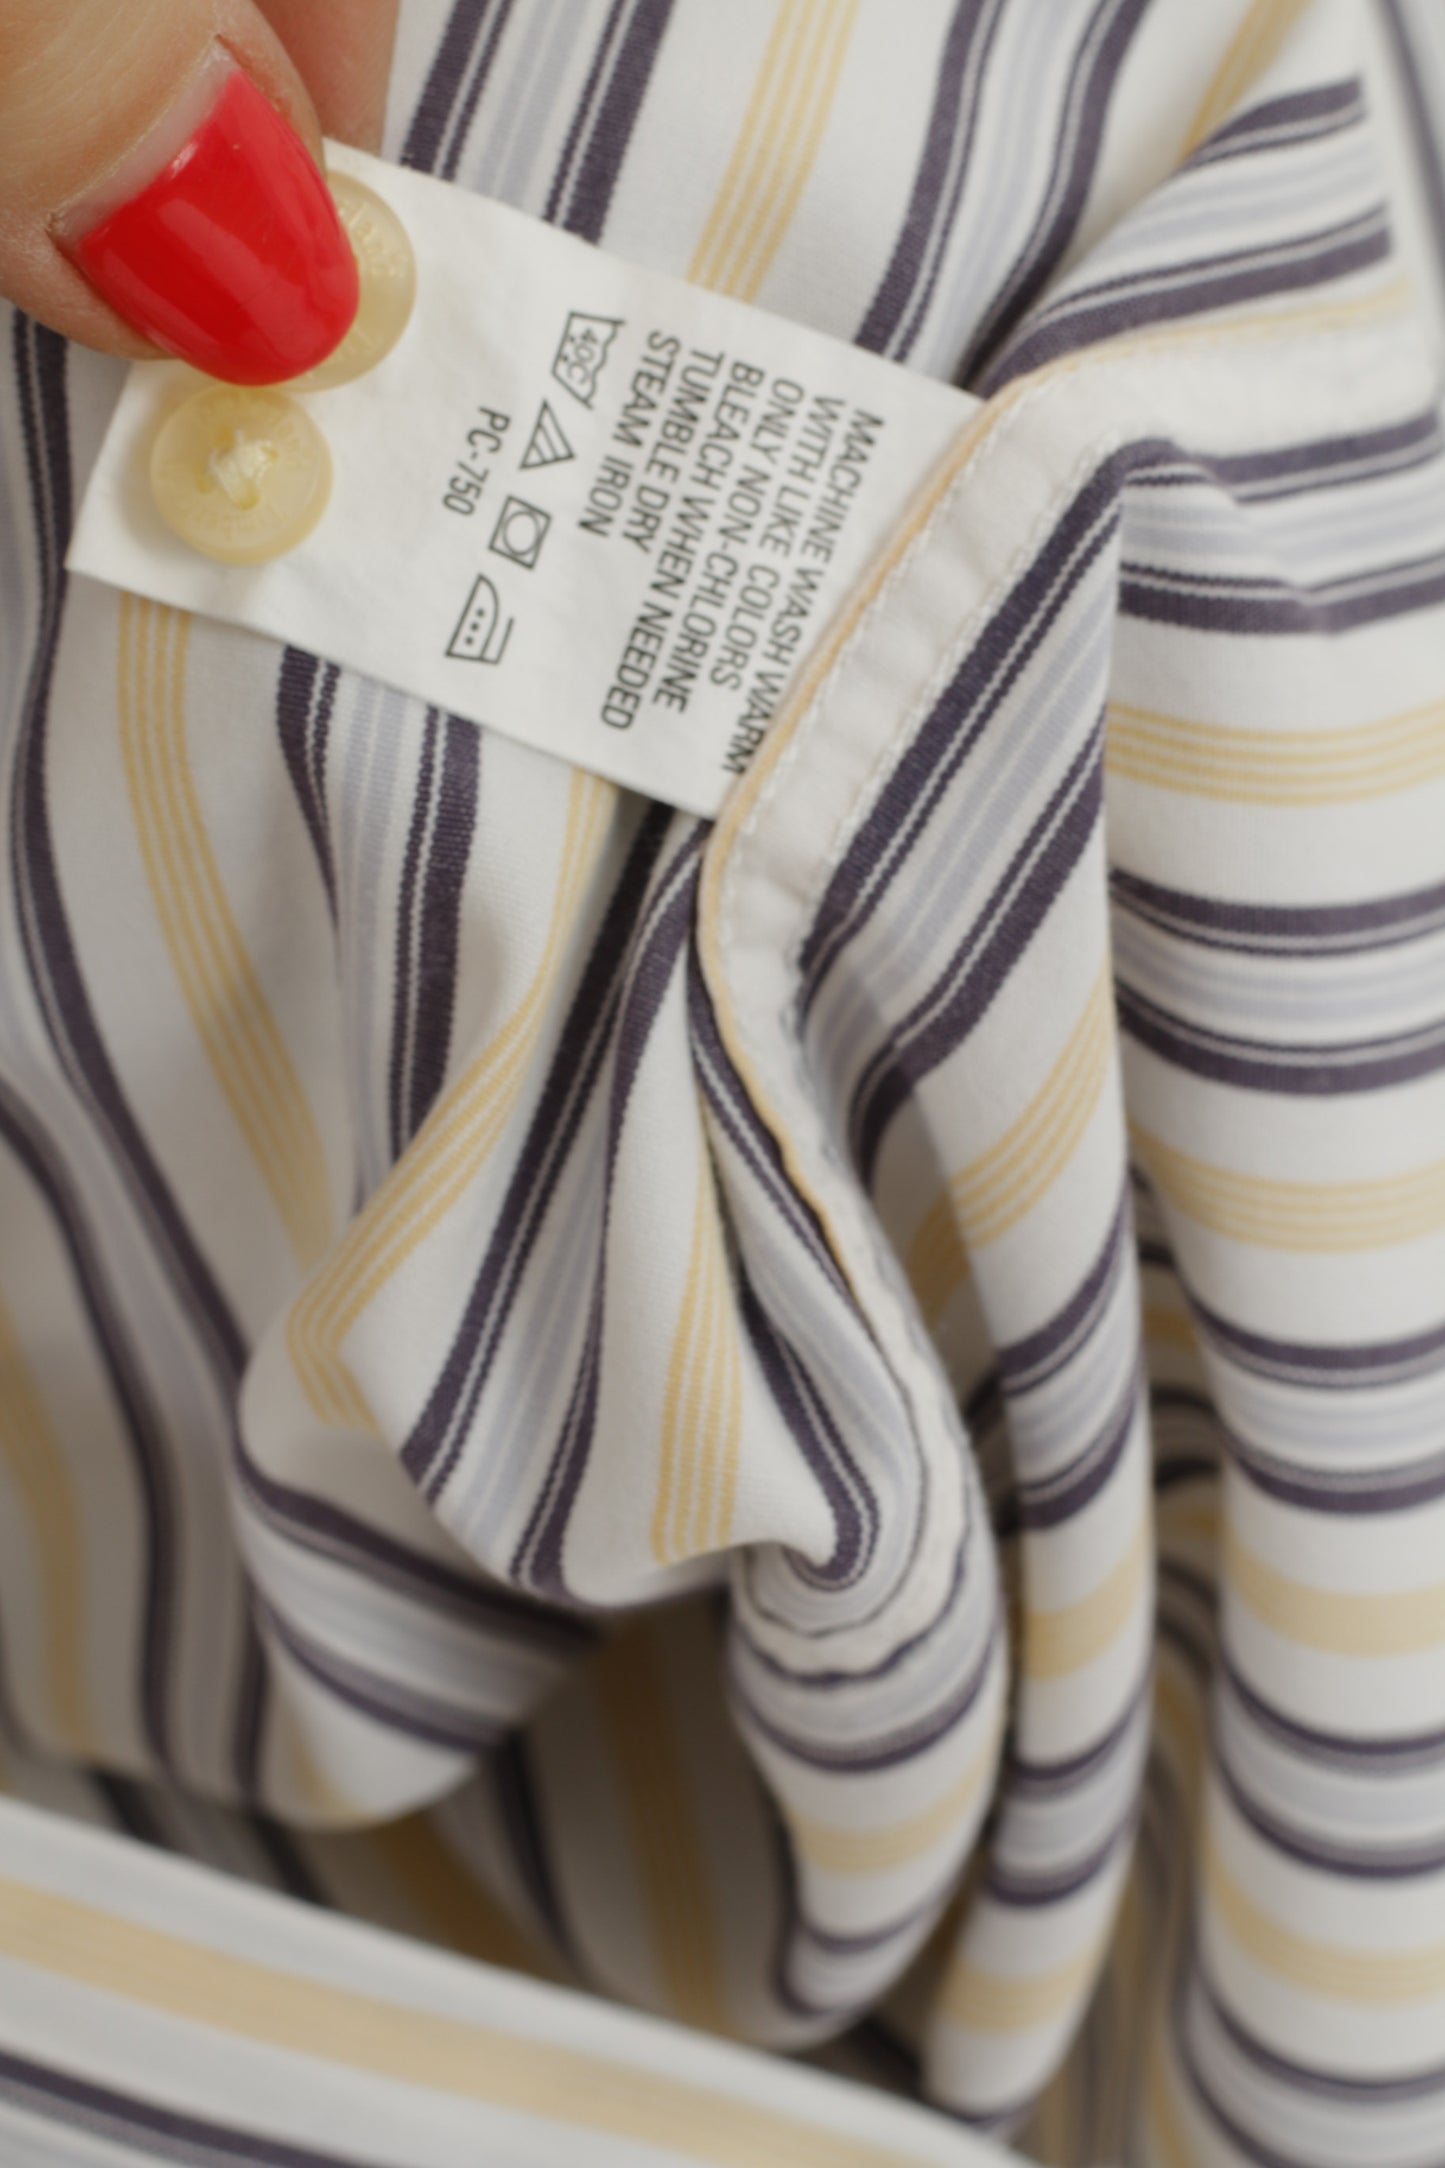 Timberland Camicia casual da uomo L bianca a righe gialle in cotone organico a maniche lunghe